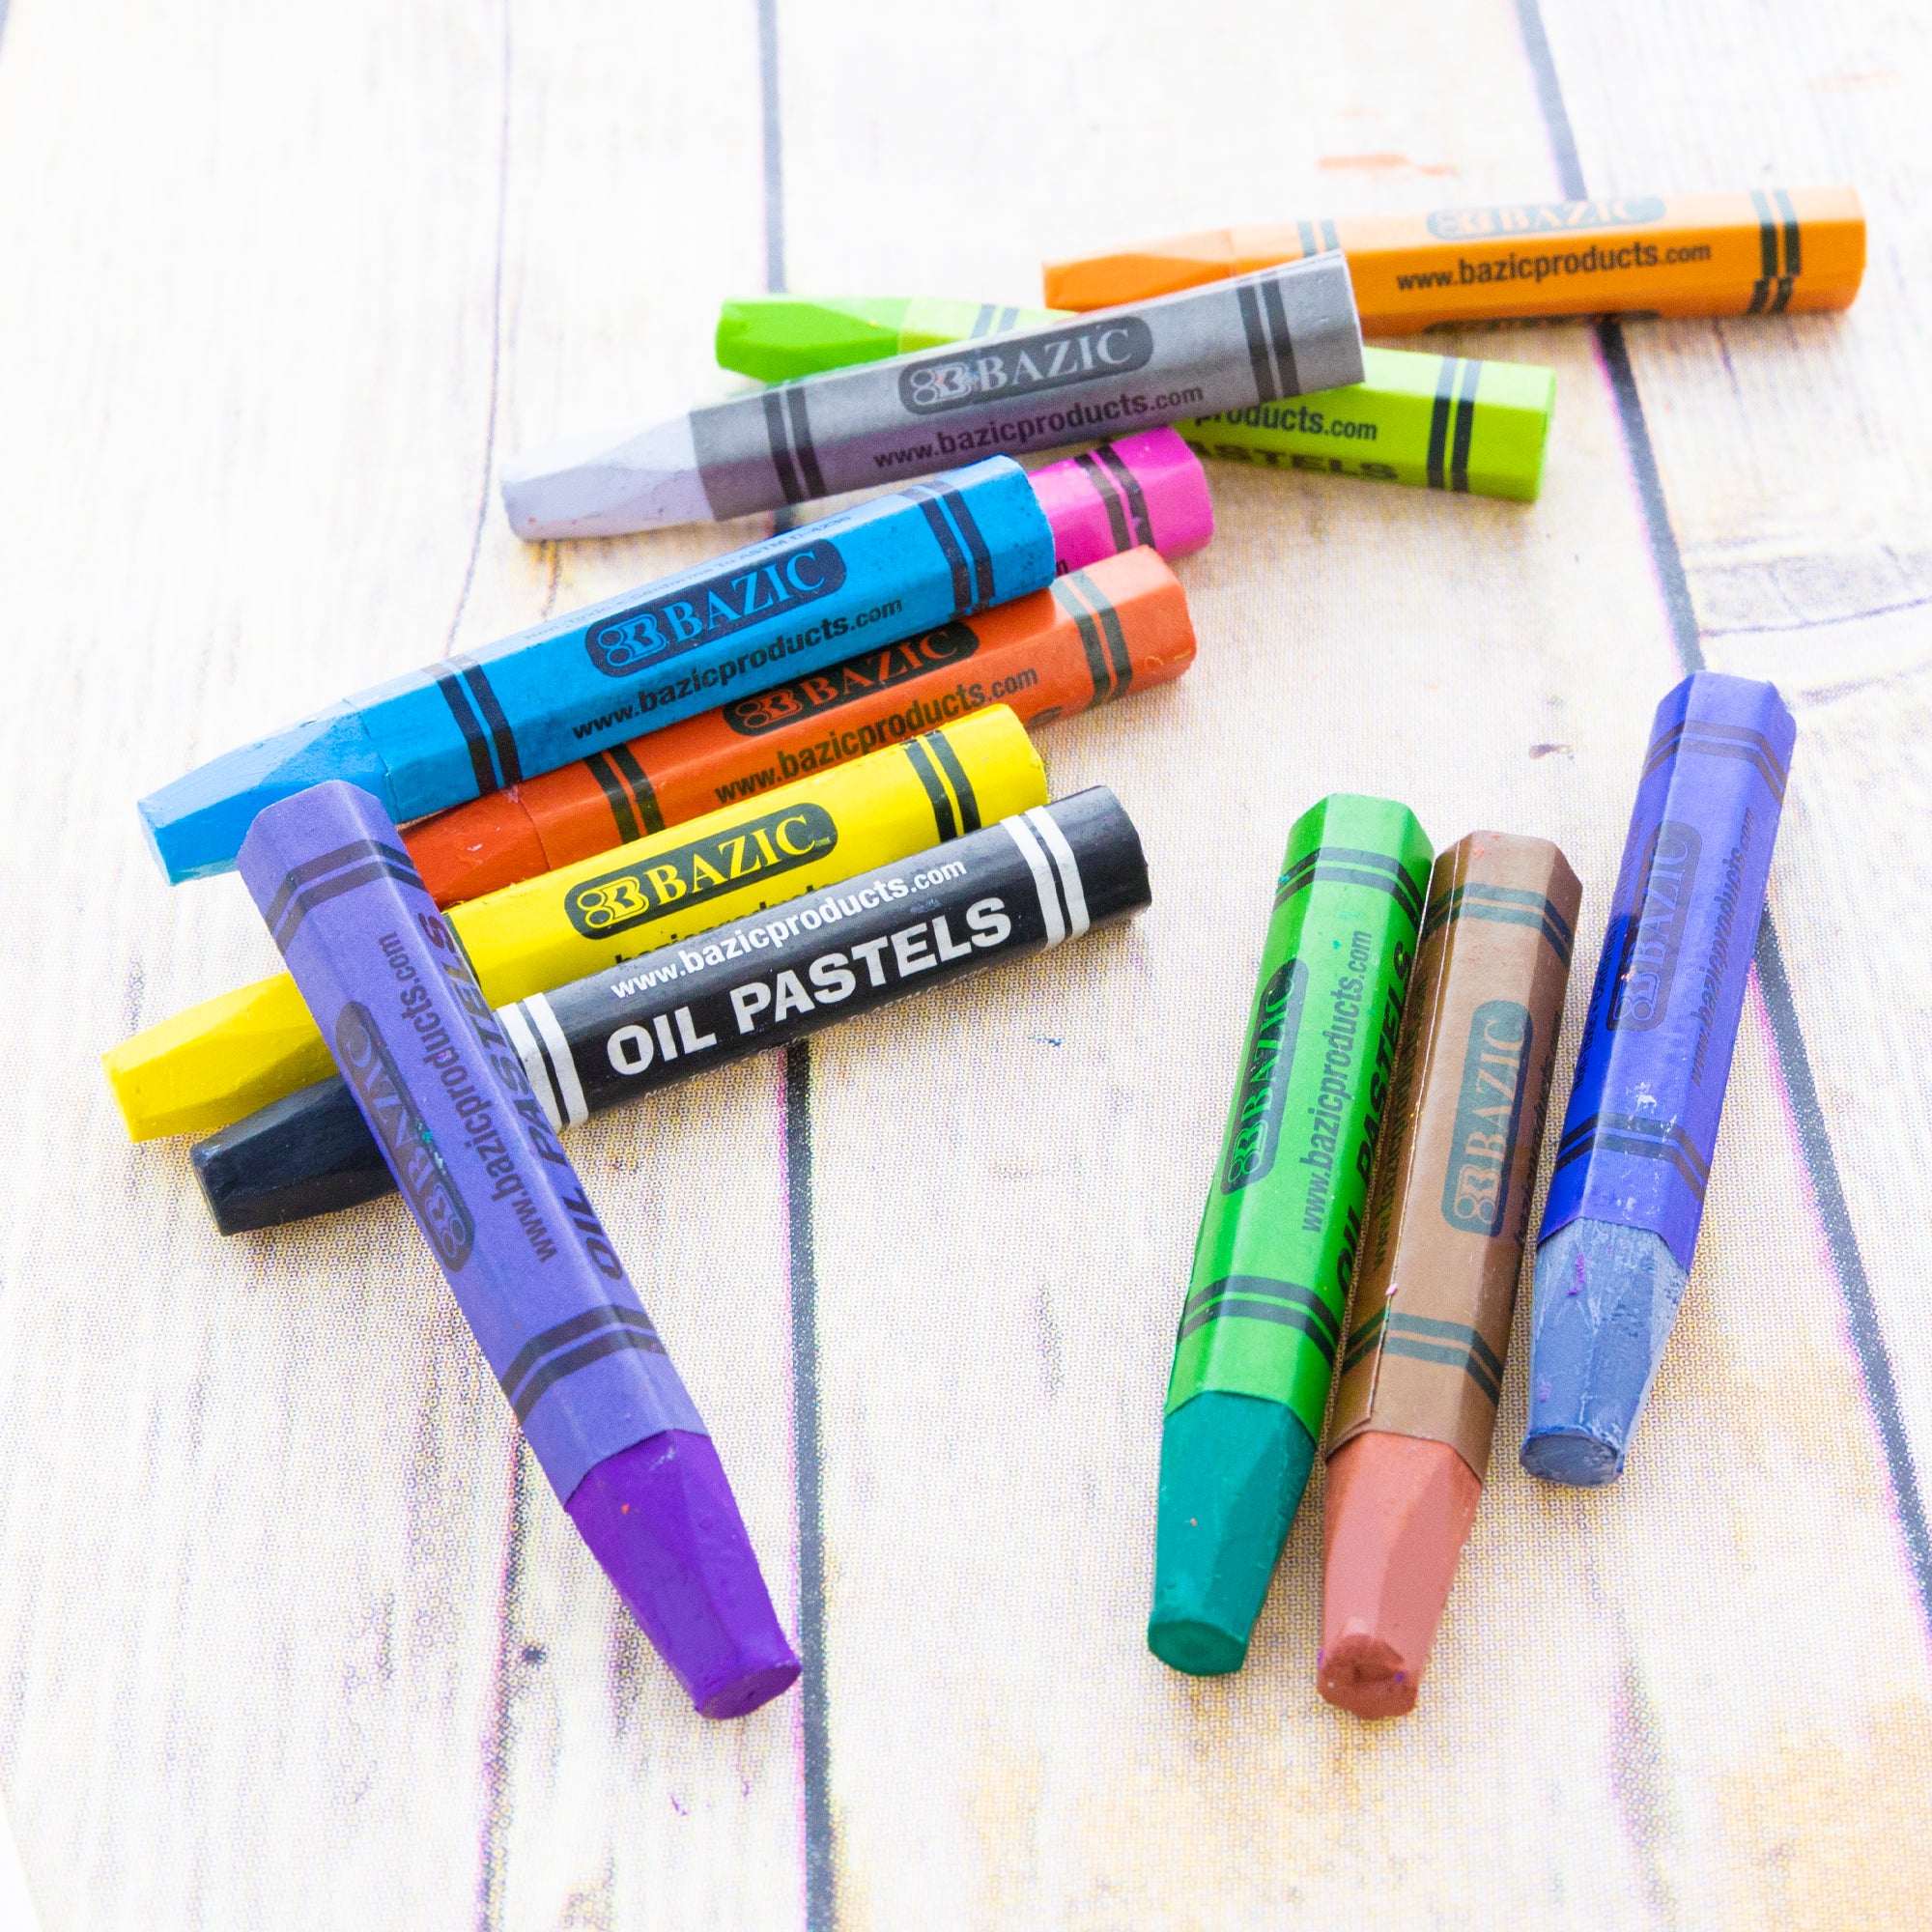 BAZIC Double-Sided Super Jumbo Crayons Premium 12 Color - Bazicstore